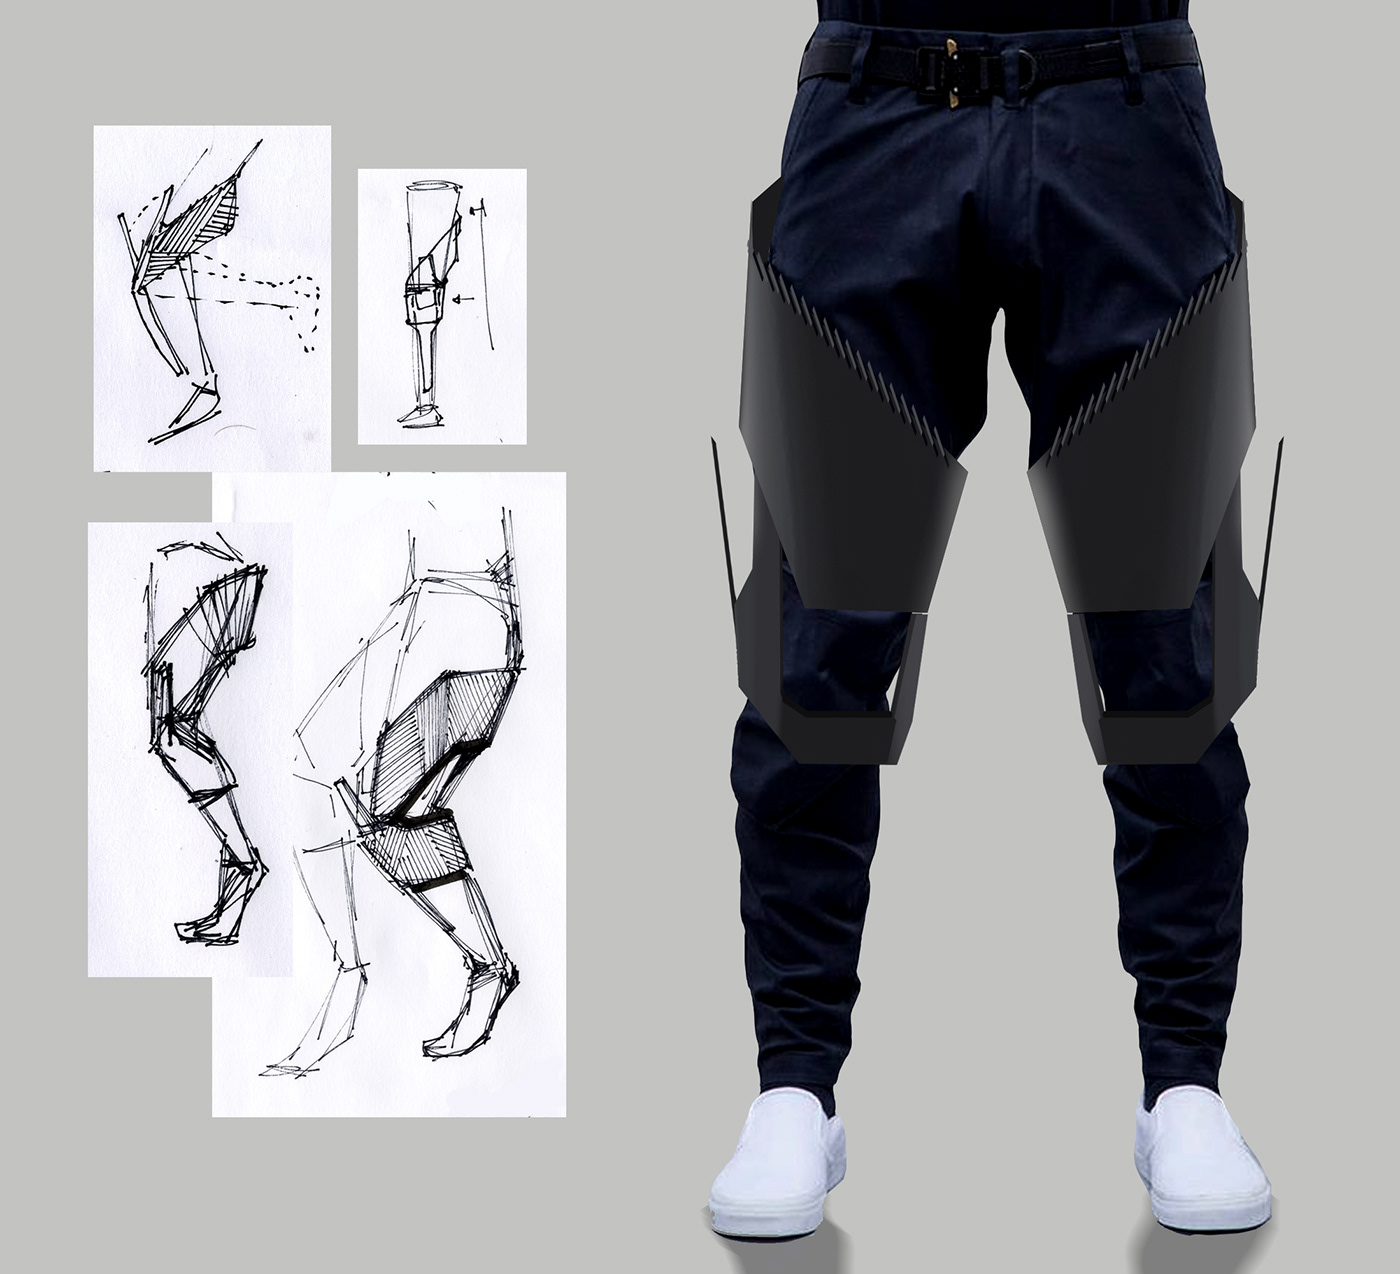 inustrialdesign design costumedesign ILLUSTRATION  future suit PEUGEOT concept productdesign transportationdesign